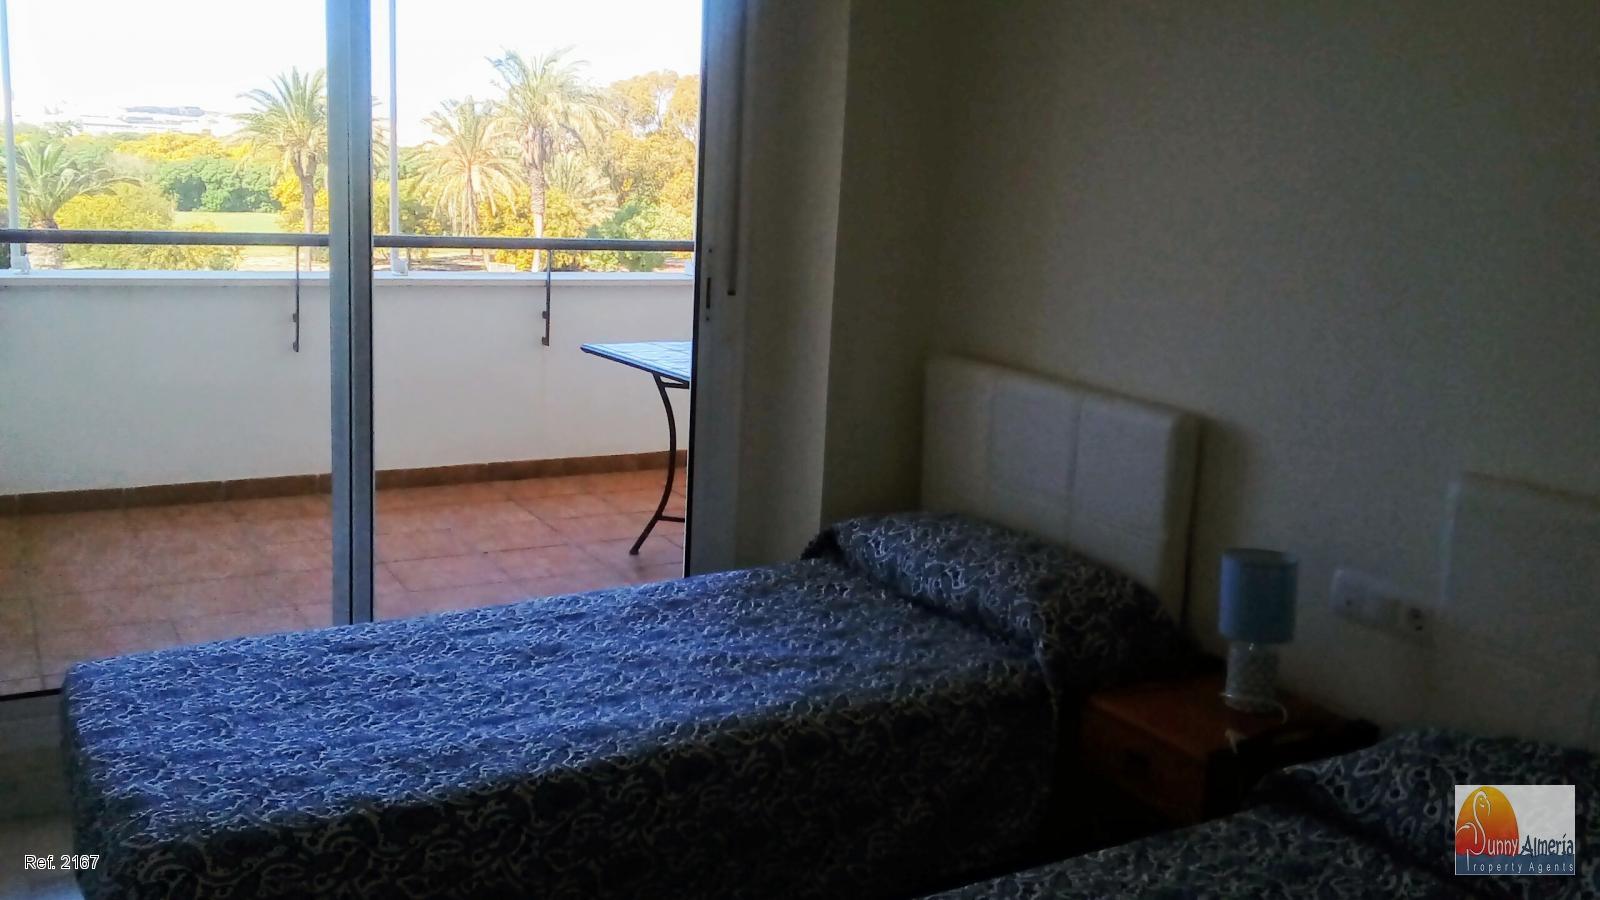 Apartment for sale in Carretera Ciudad de Cadiz 1A (Roquetas de Mar), 165.000 €